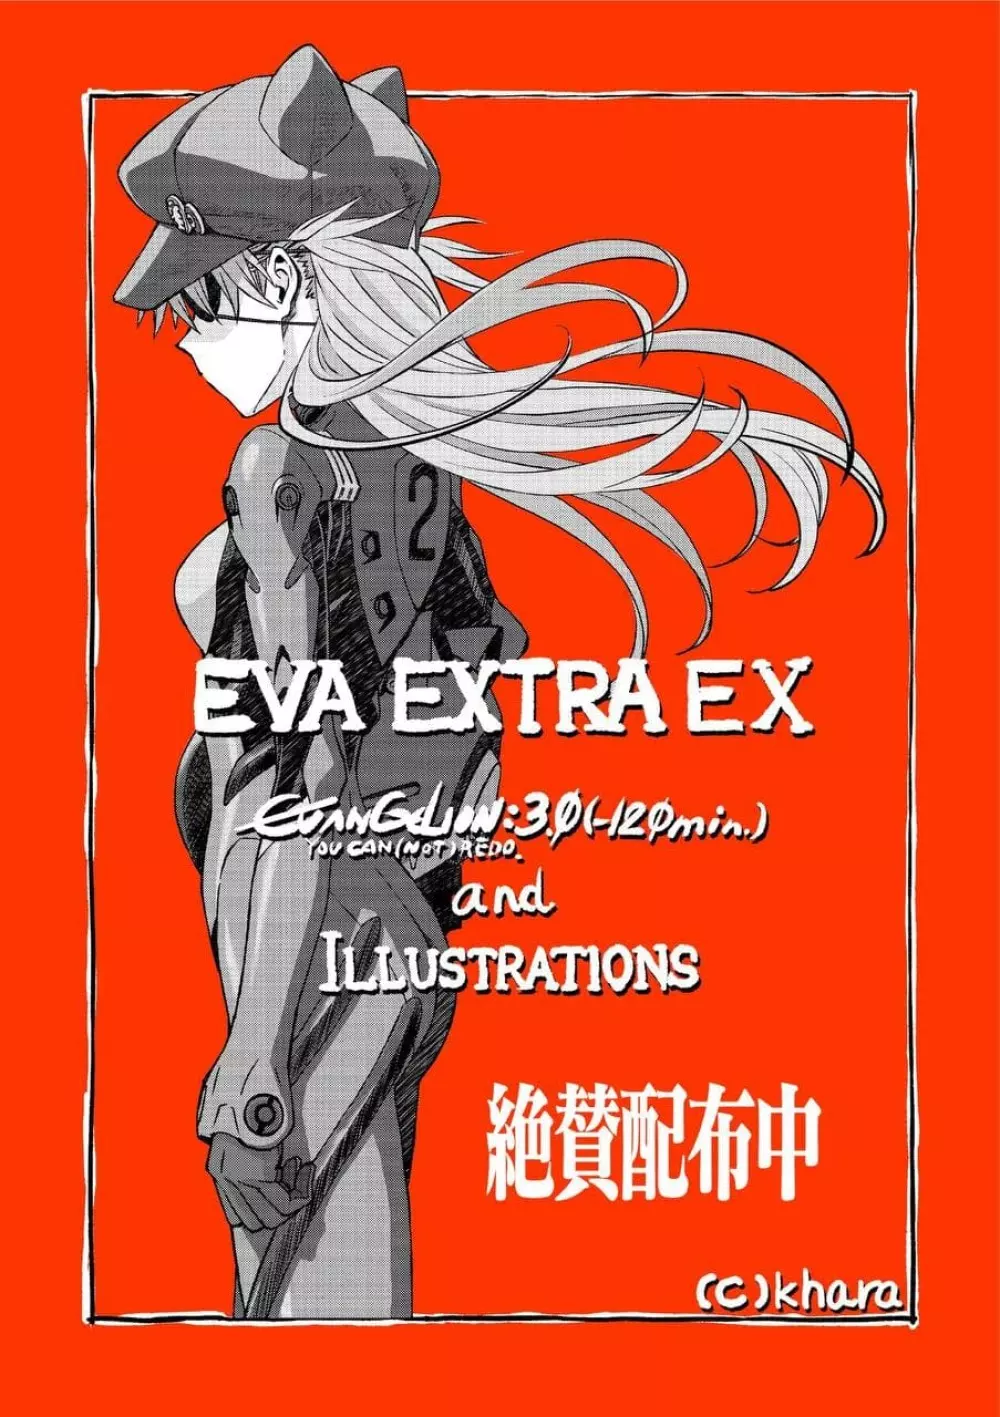 (EVA EXTRA EX)Evangelion 3.0 (-120 min.) and Illustrations [Chinese]